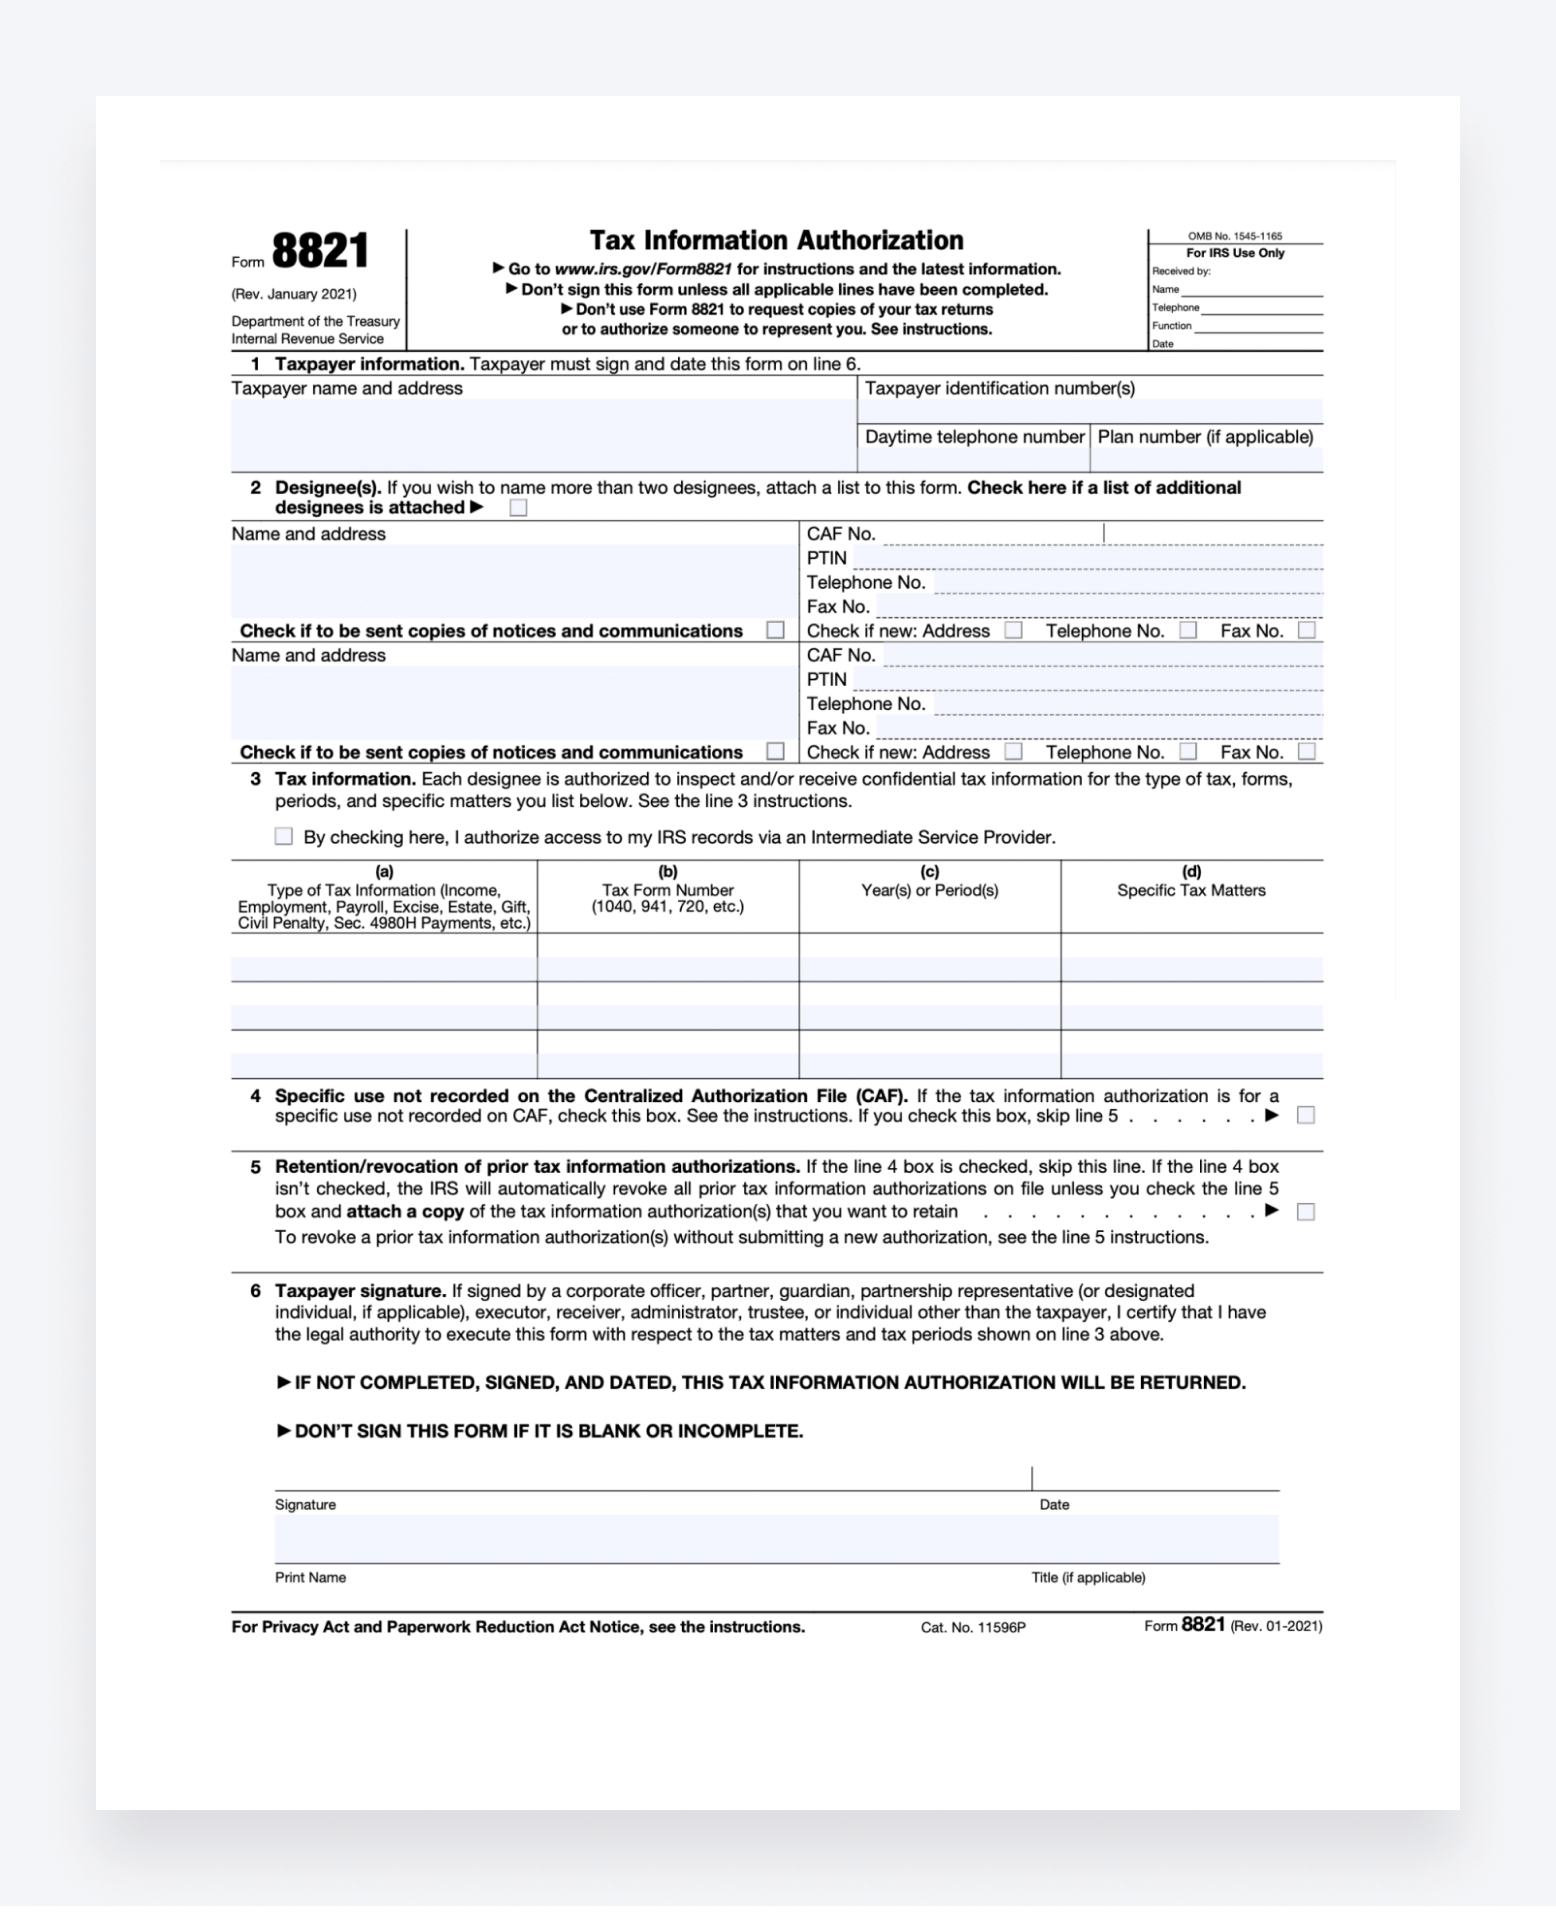 A screenshot of IRS Form 8821.